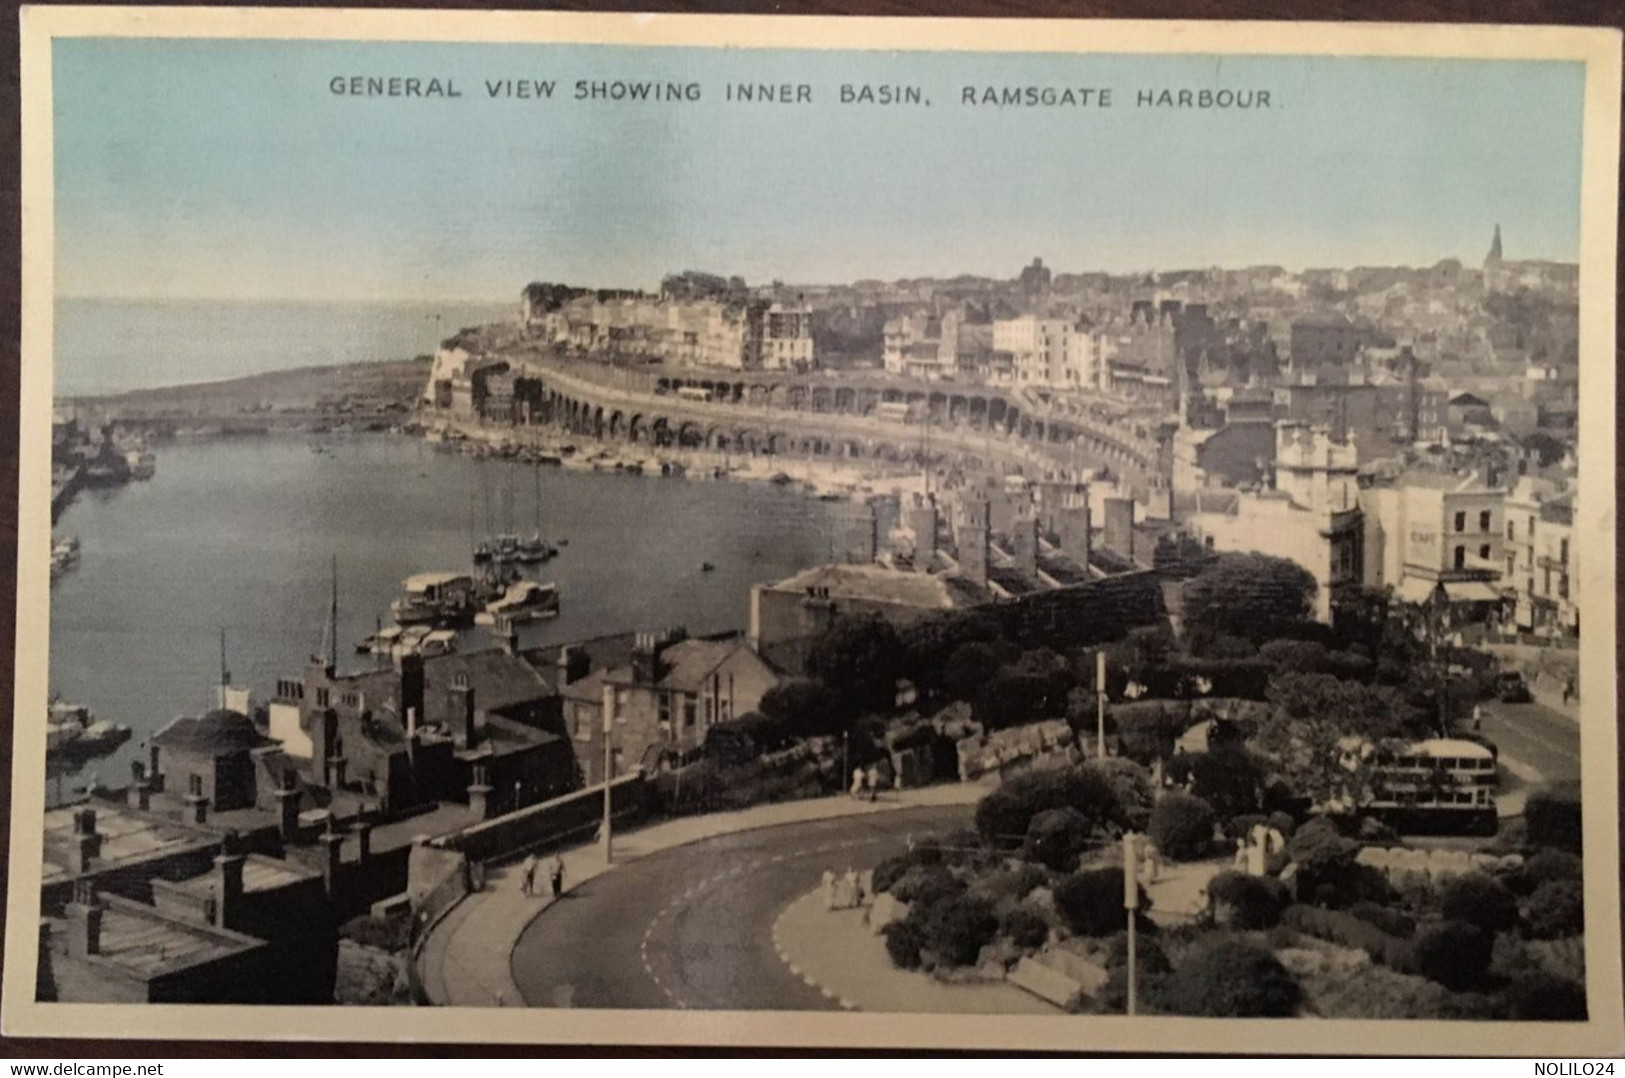 Cpsm, General View Showing Inner Basin, Ramsgate Harbour, Non écrite, éd Dennis & Sons "Photoblue", Royaume Uni UK - Ramsgate